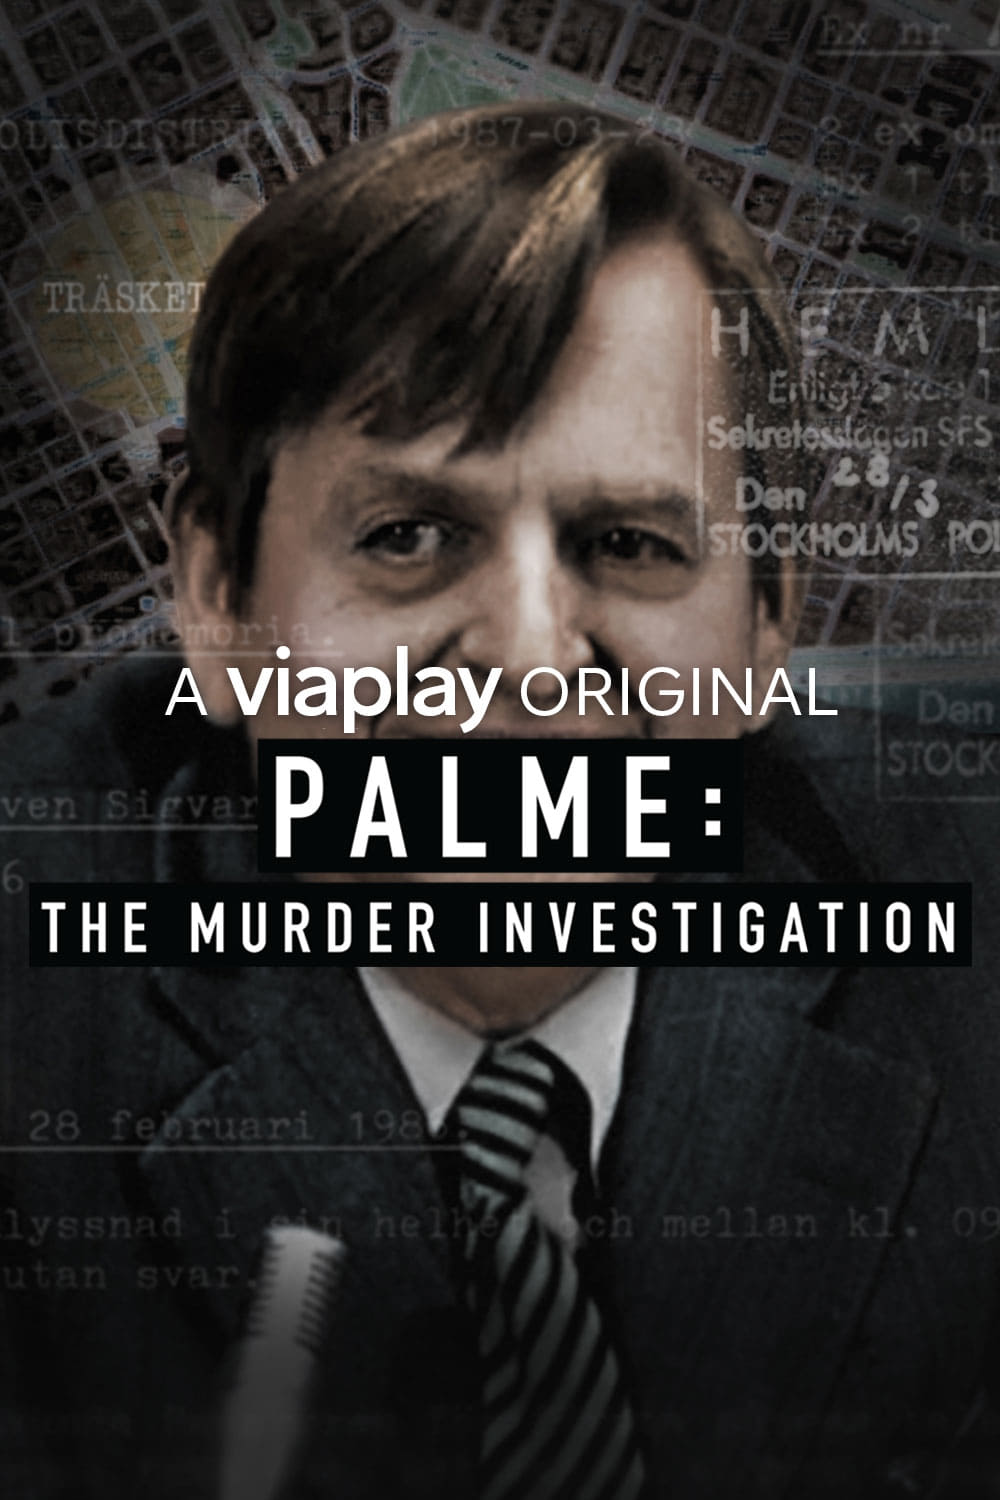 Palme: The Murder Investigation